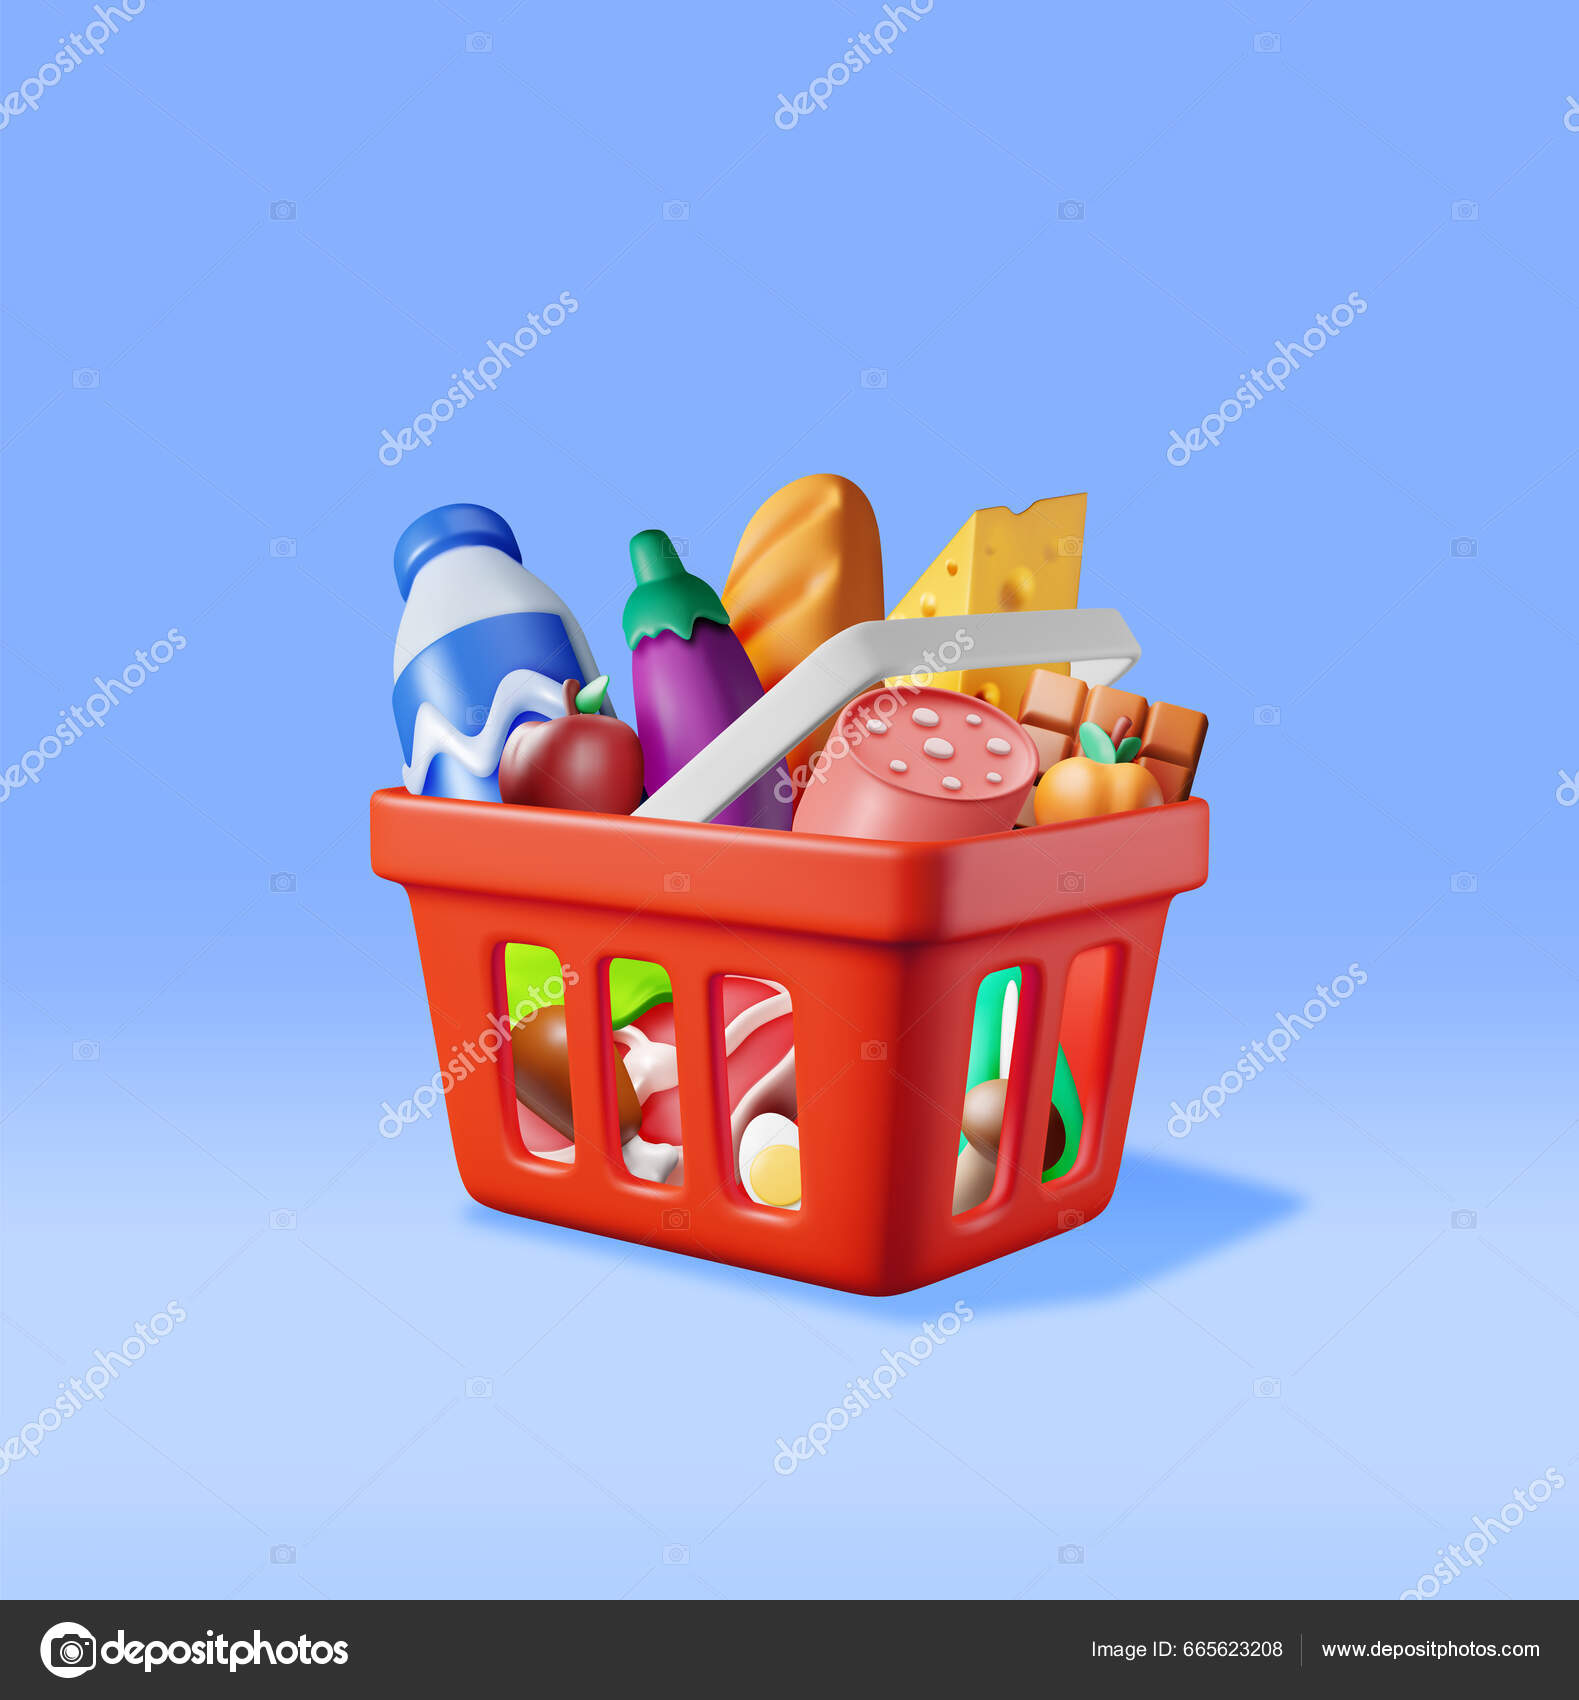 Shopping Plastkorg Med Färska Produkter Render Grocery Store Snabbköp Mat  vektor av ©abscent 665623208